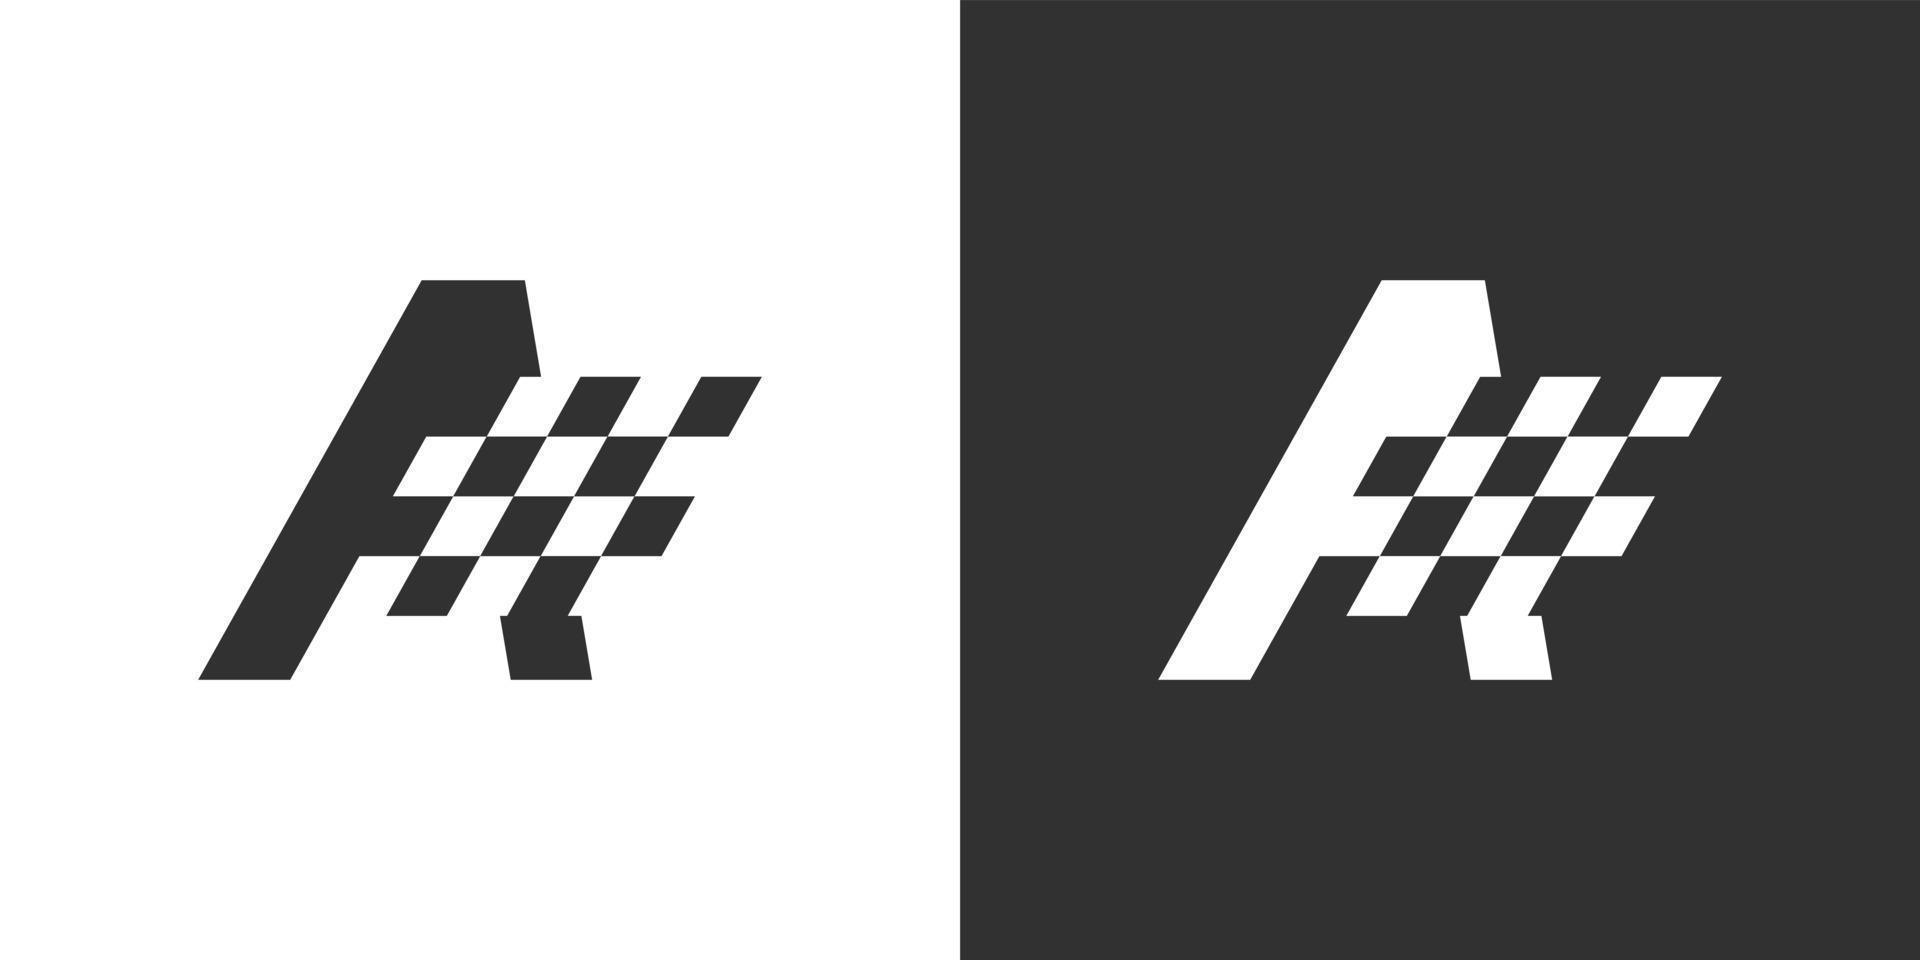 Letter A vector logo design with Race flag design.